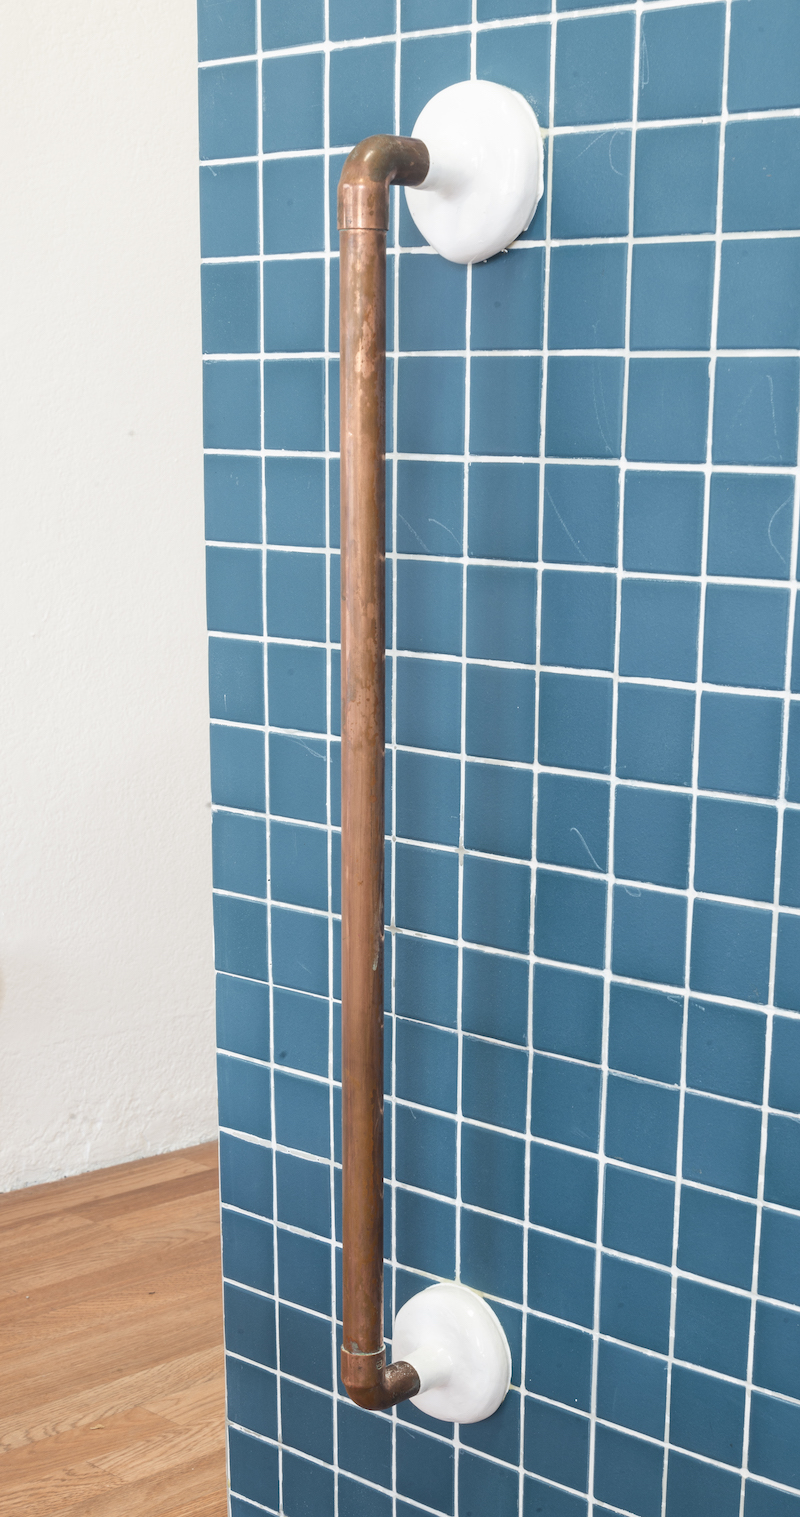 Blue tile corner sock sculpture and pipes